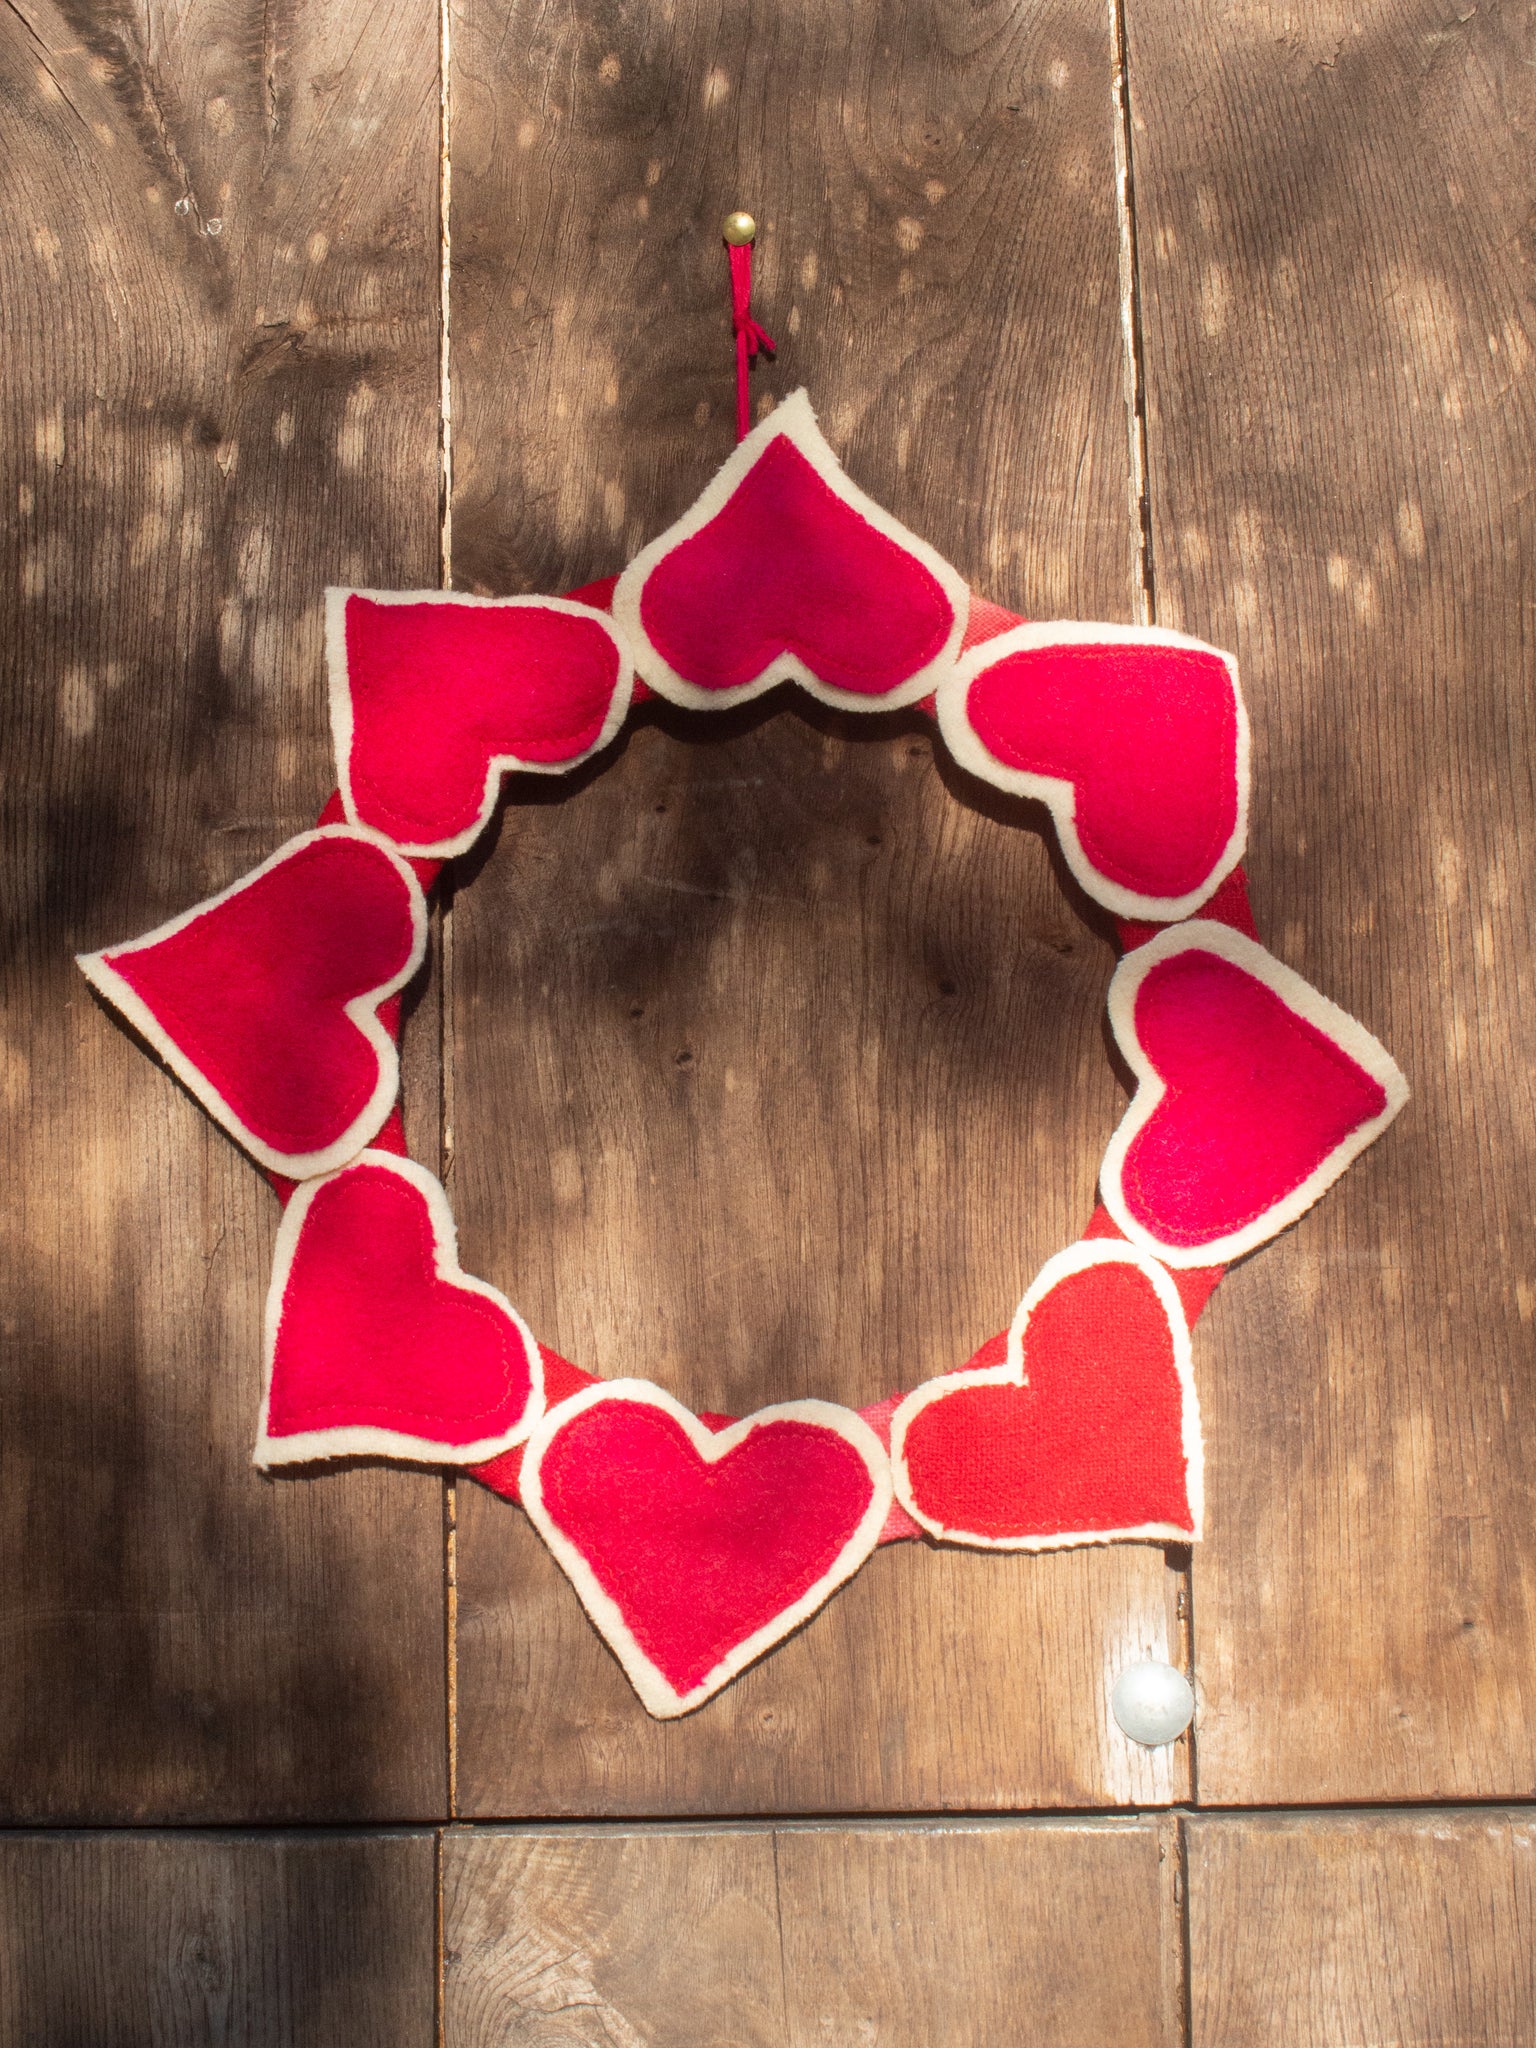 Heart Wreath - Handmade Decoration